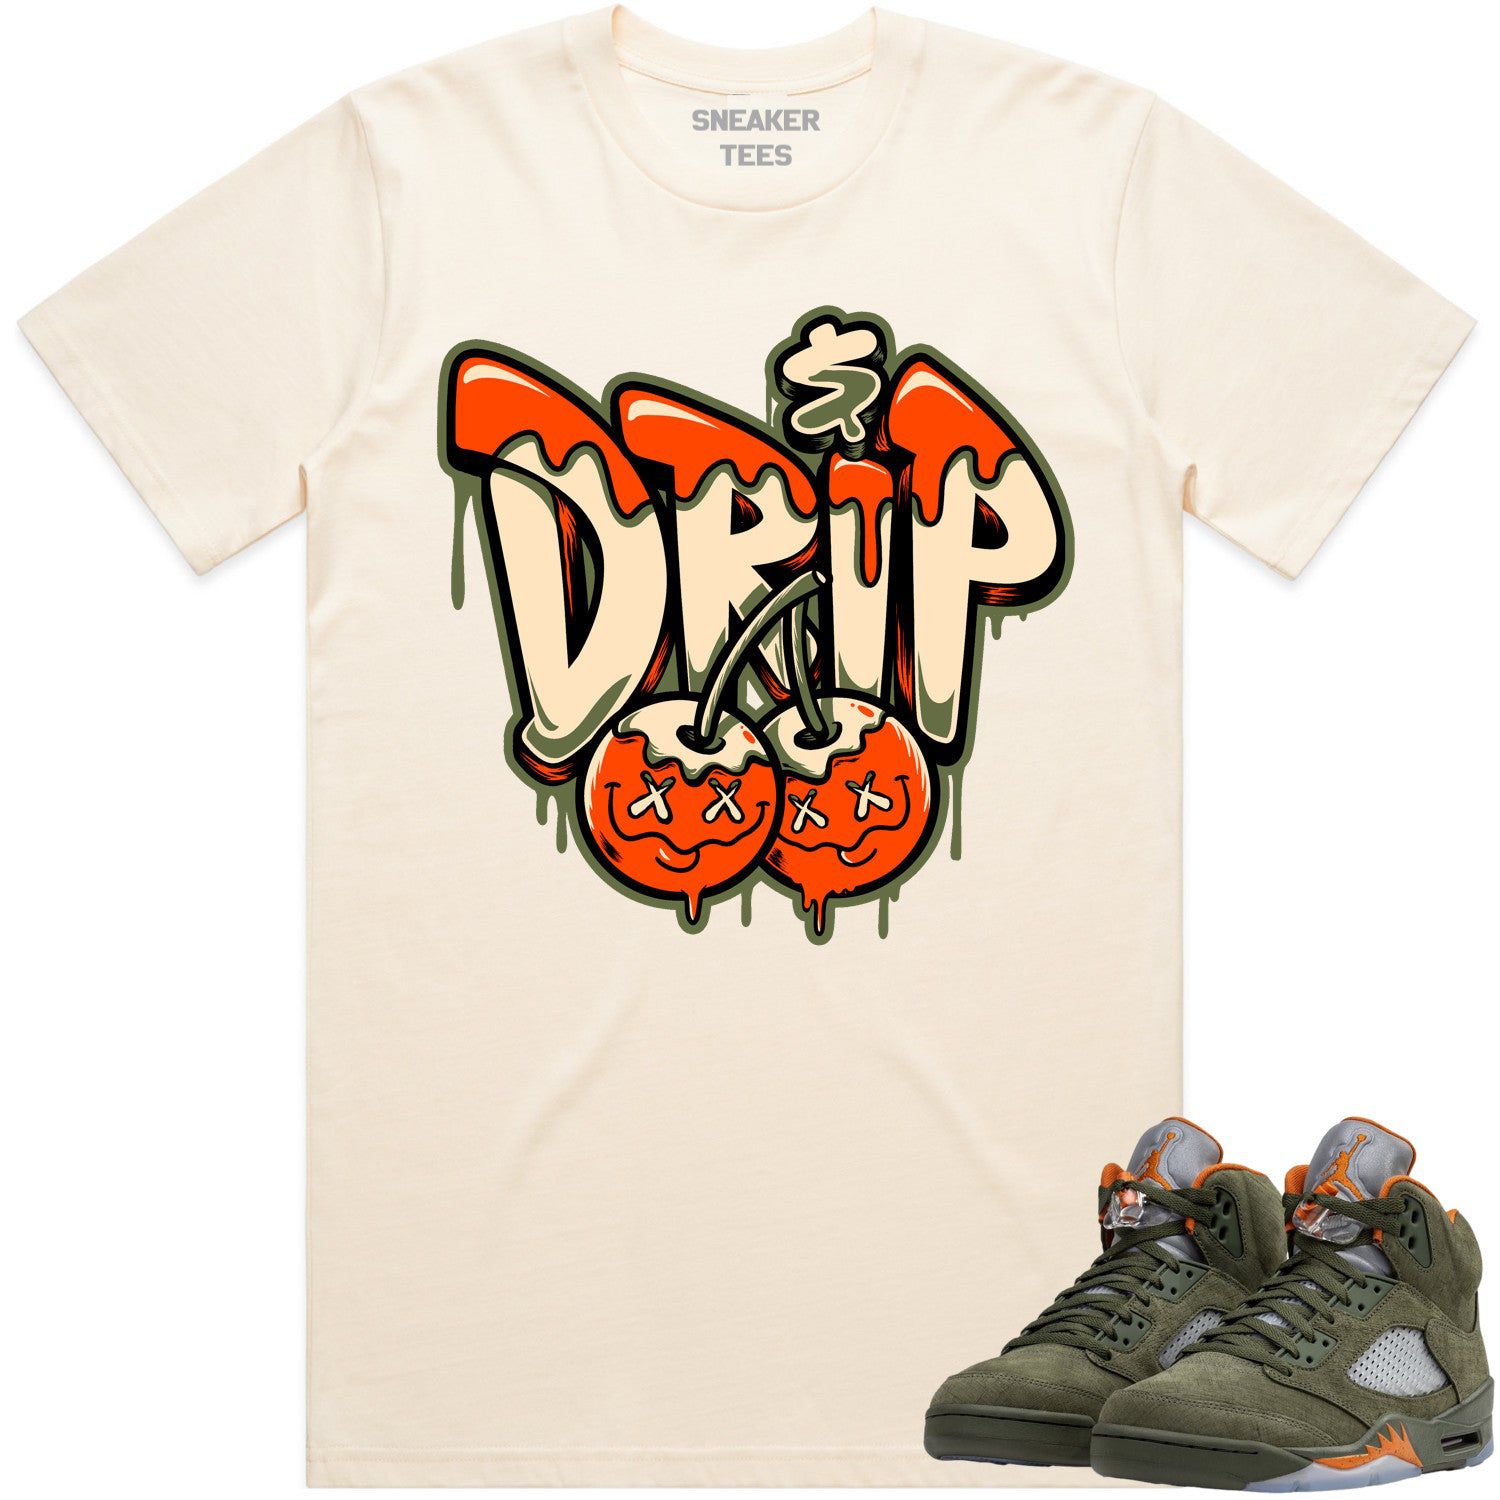 Olive 5s Shirts - Jordan Retro 5 Olive Sneaker Tees - Money Drip